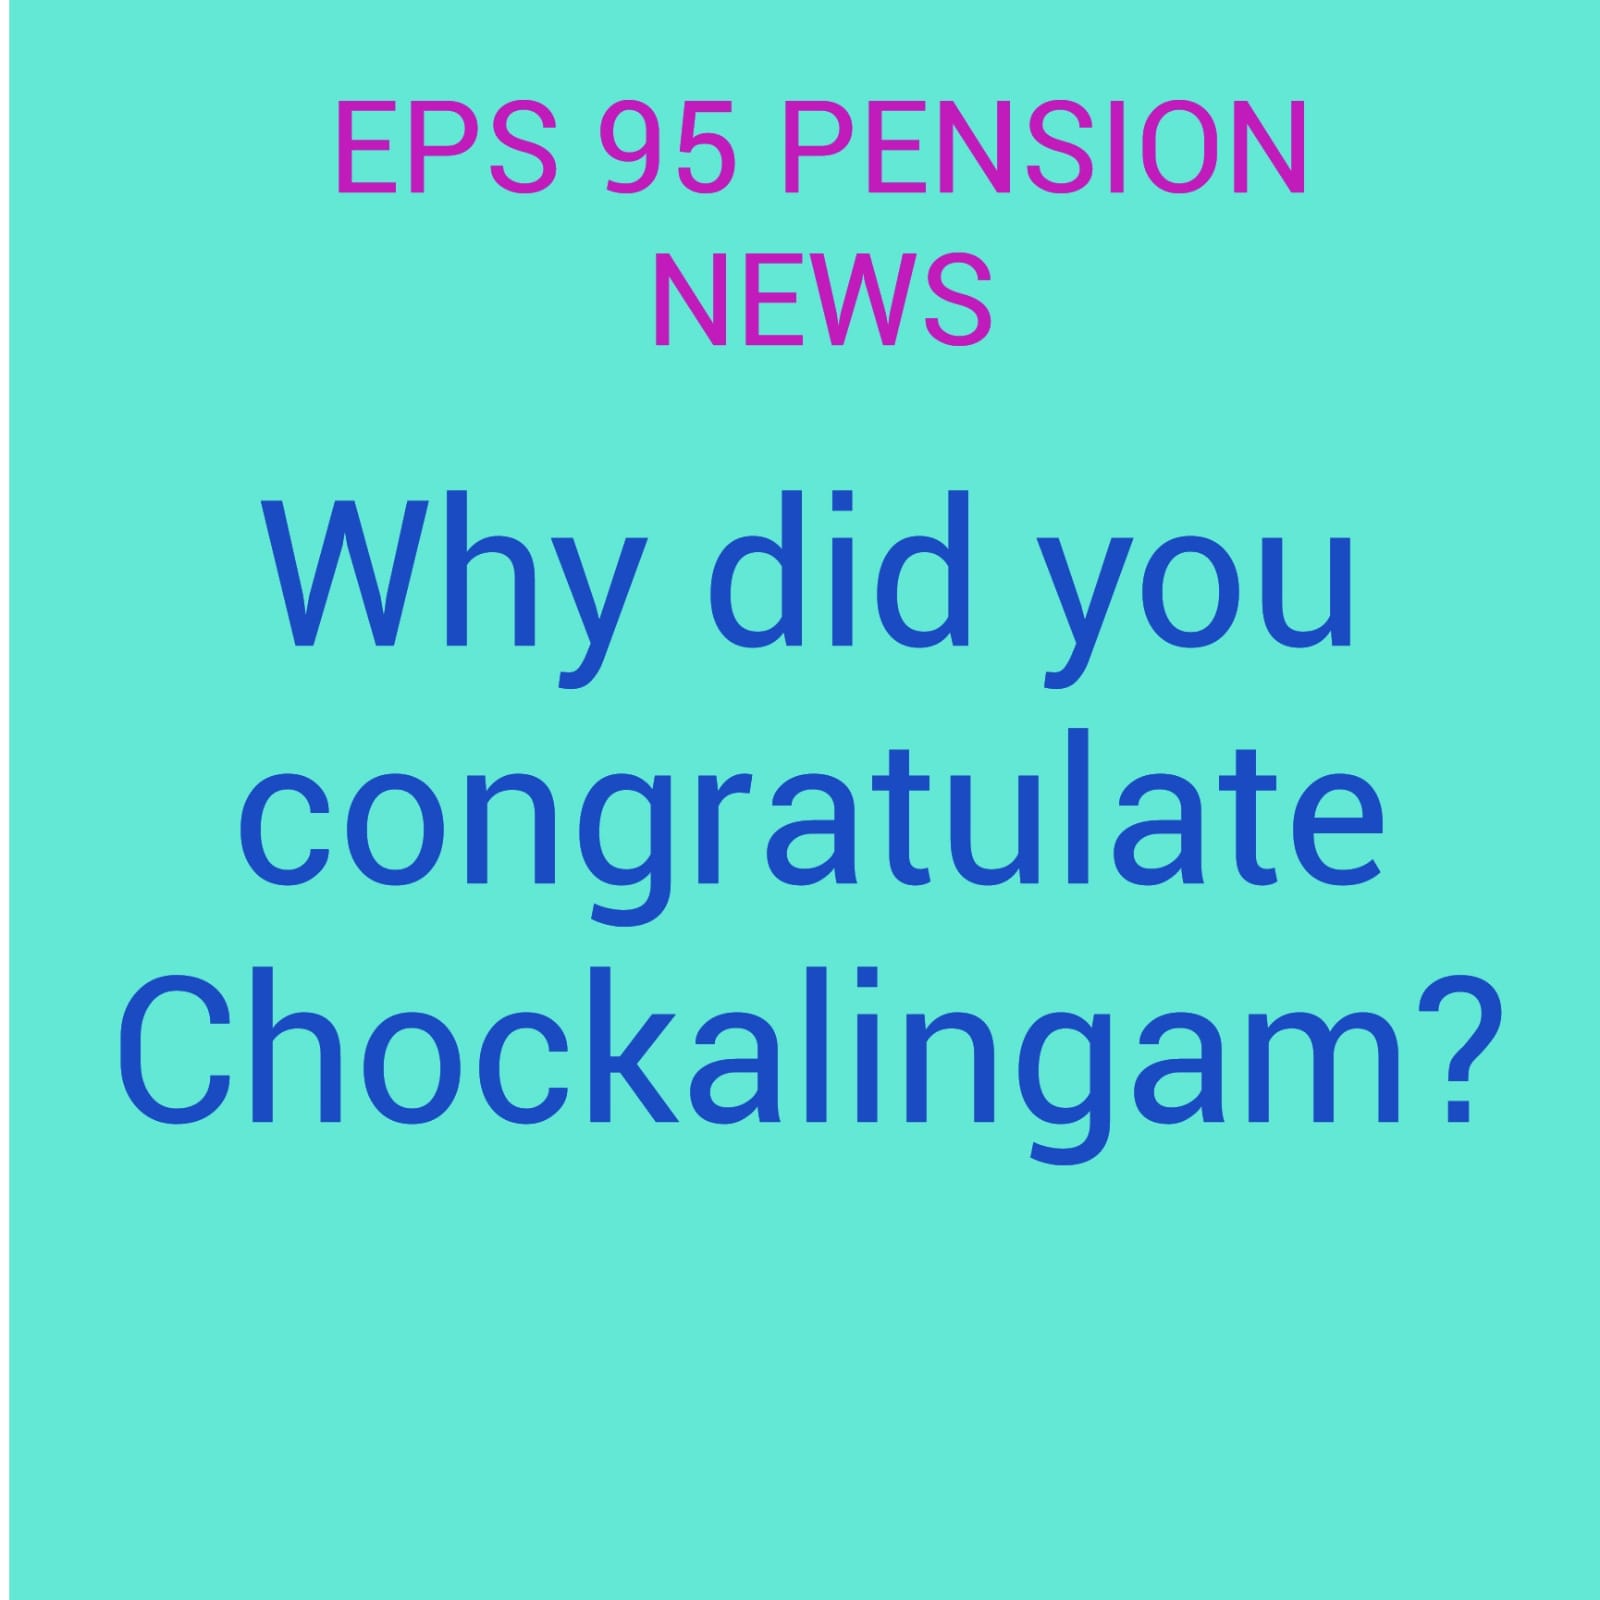 Why did you congratulate Chockalingam